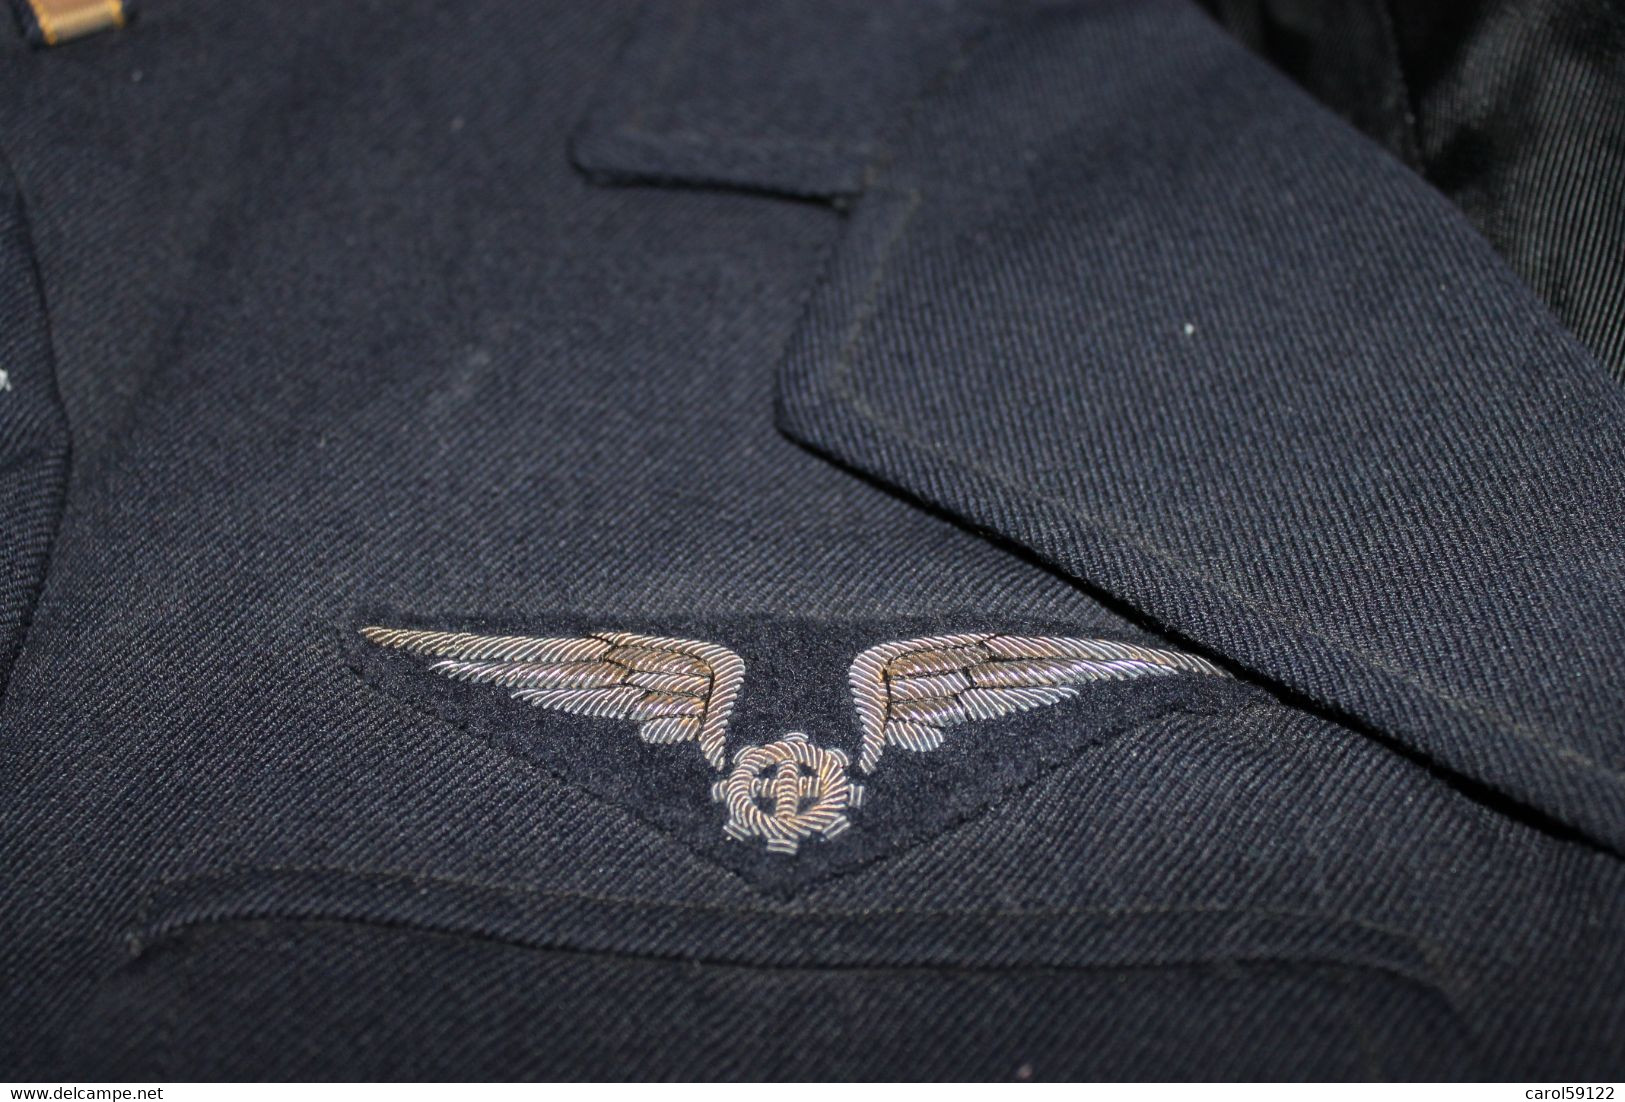 Veste Adjudant Mécanicien Armée de l'Air